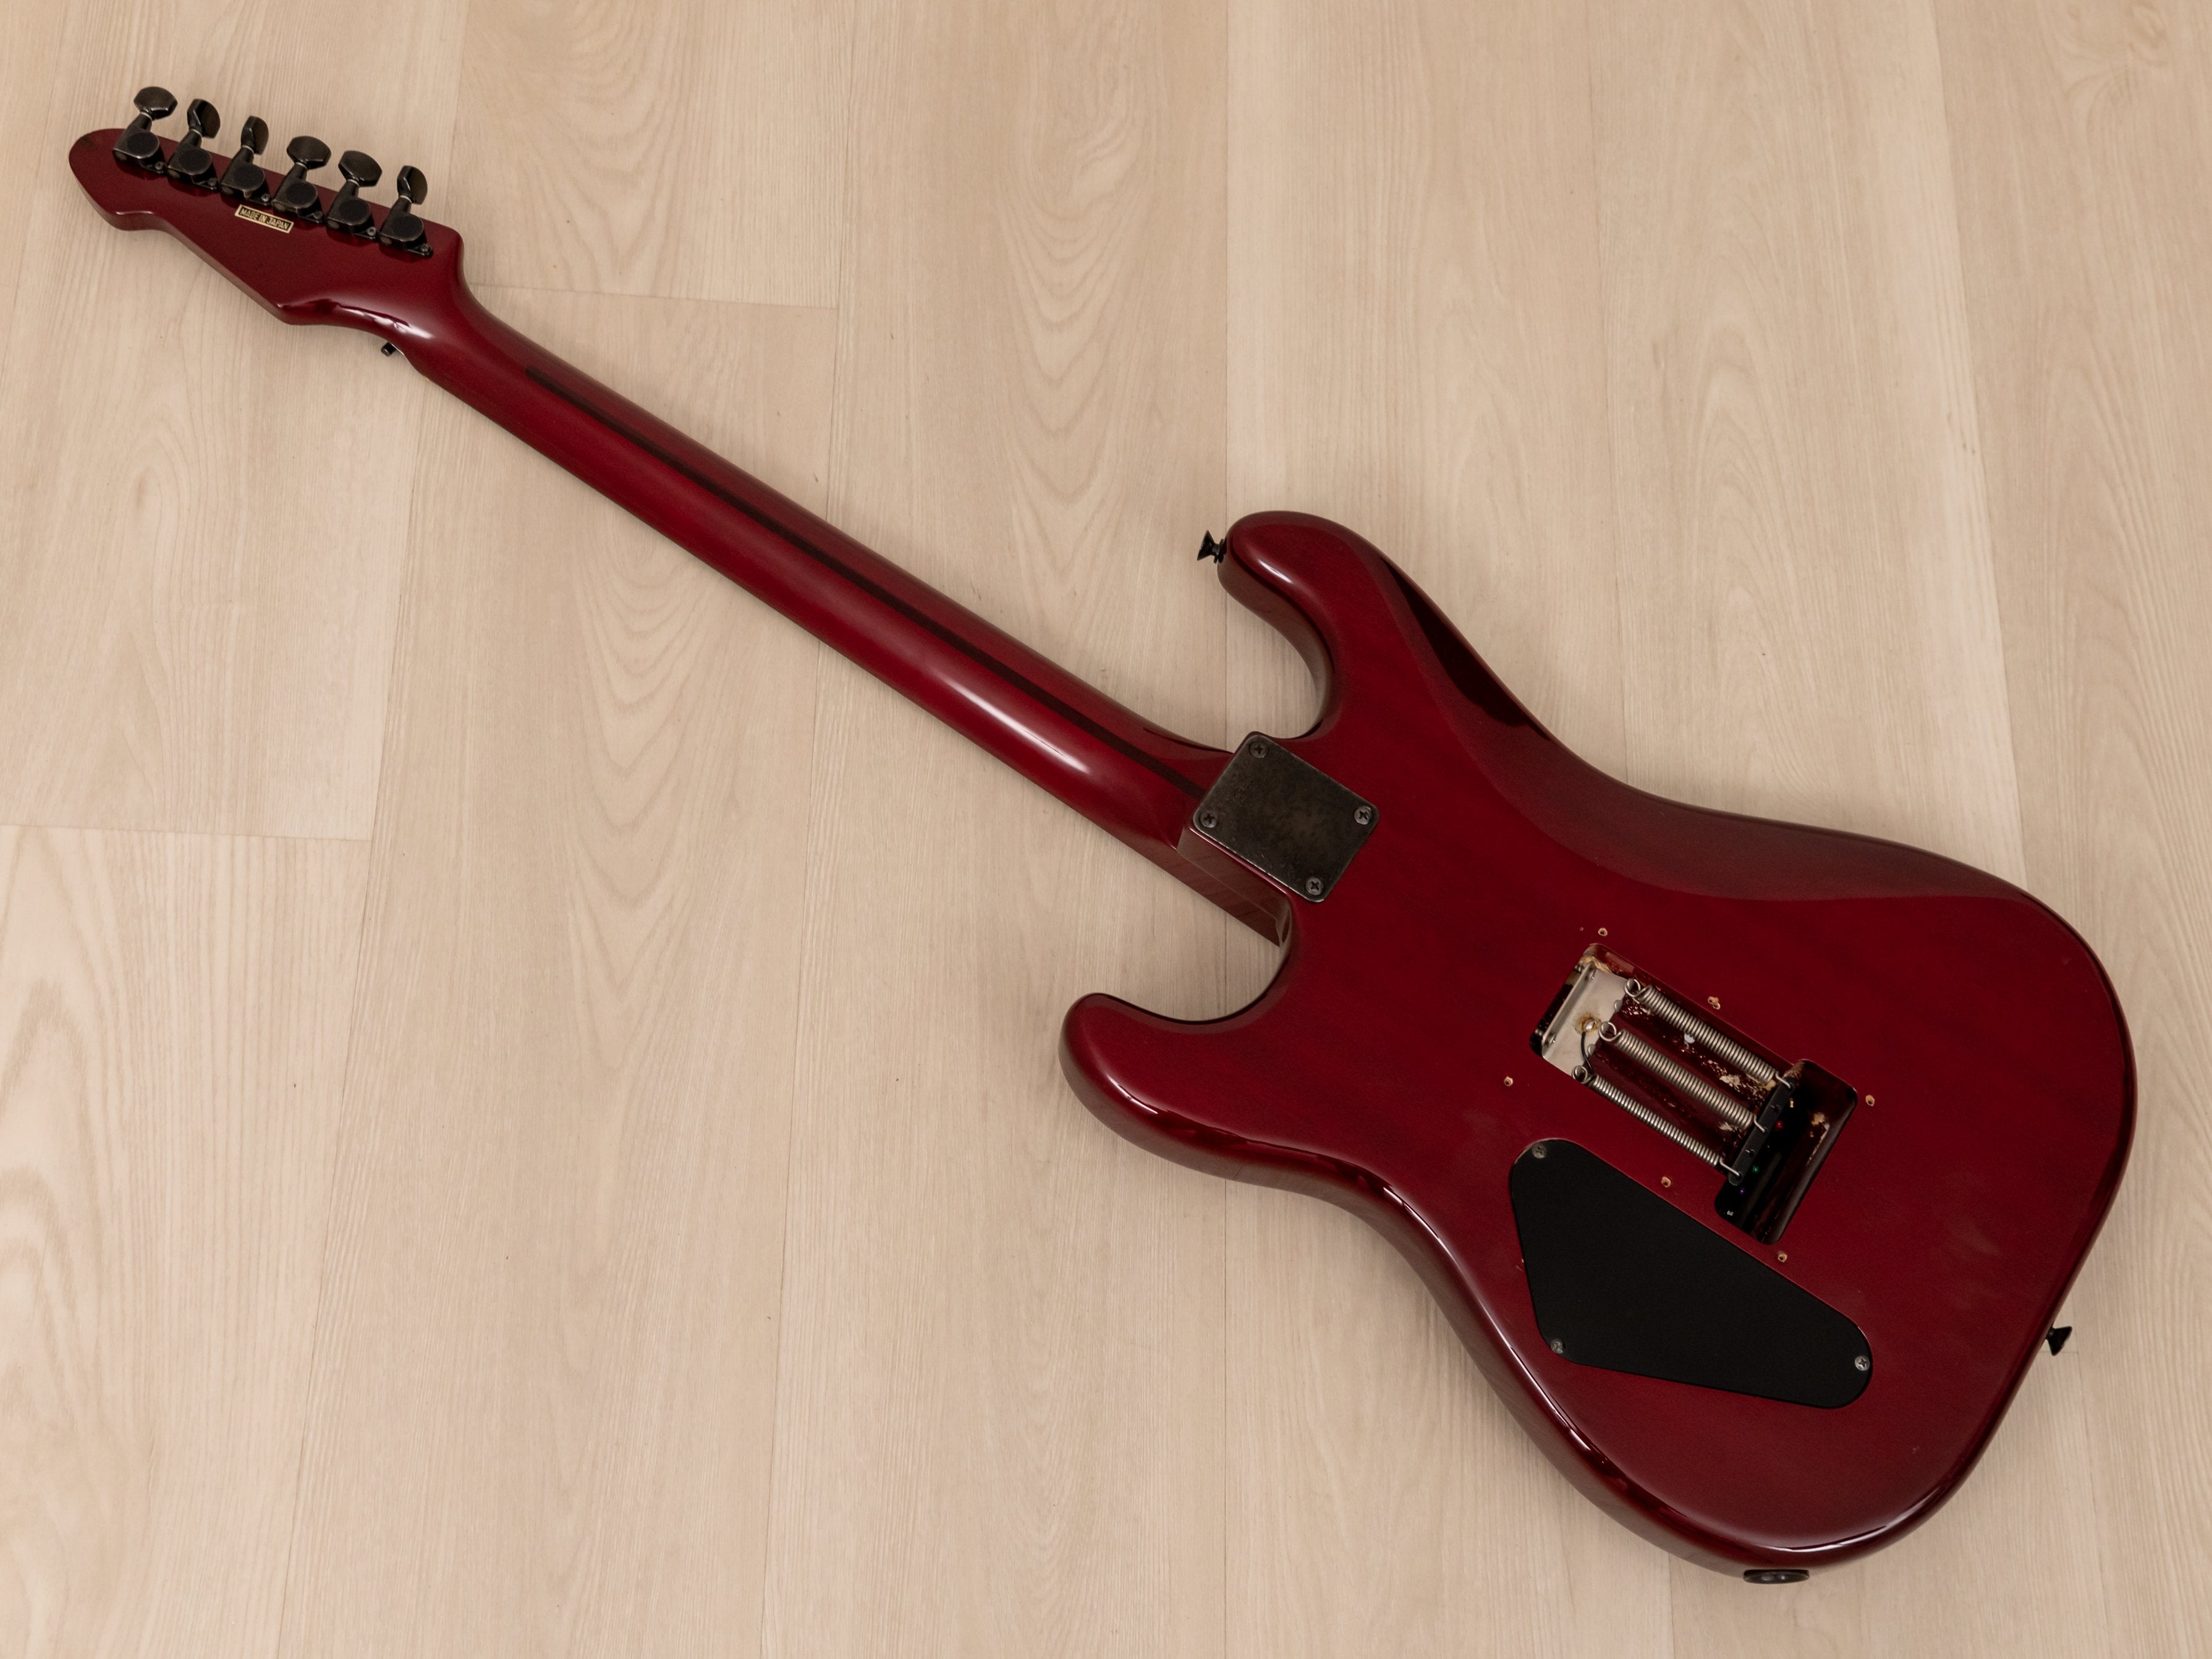 1984 ESP The Mirage Standard Superstrat Vintage Electric Guitar Transparent Cherry Red, Japan